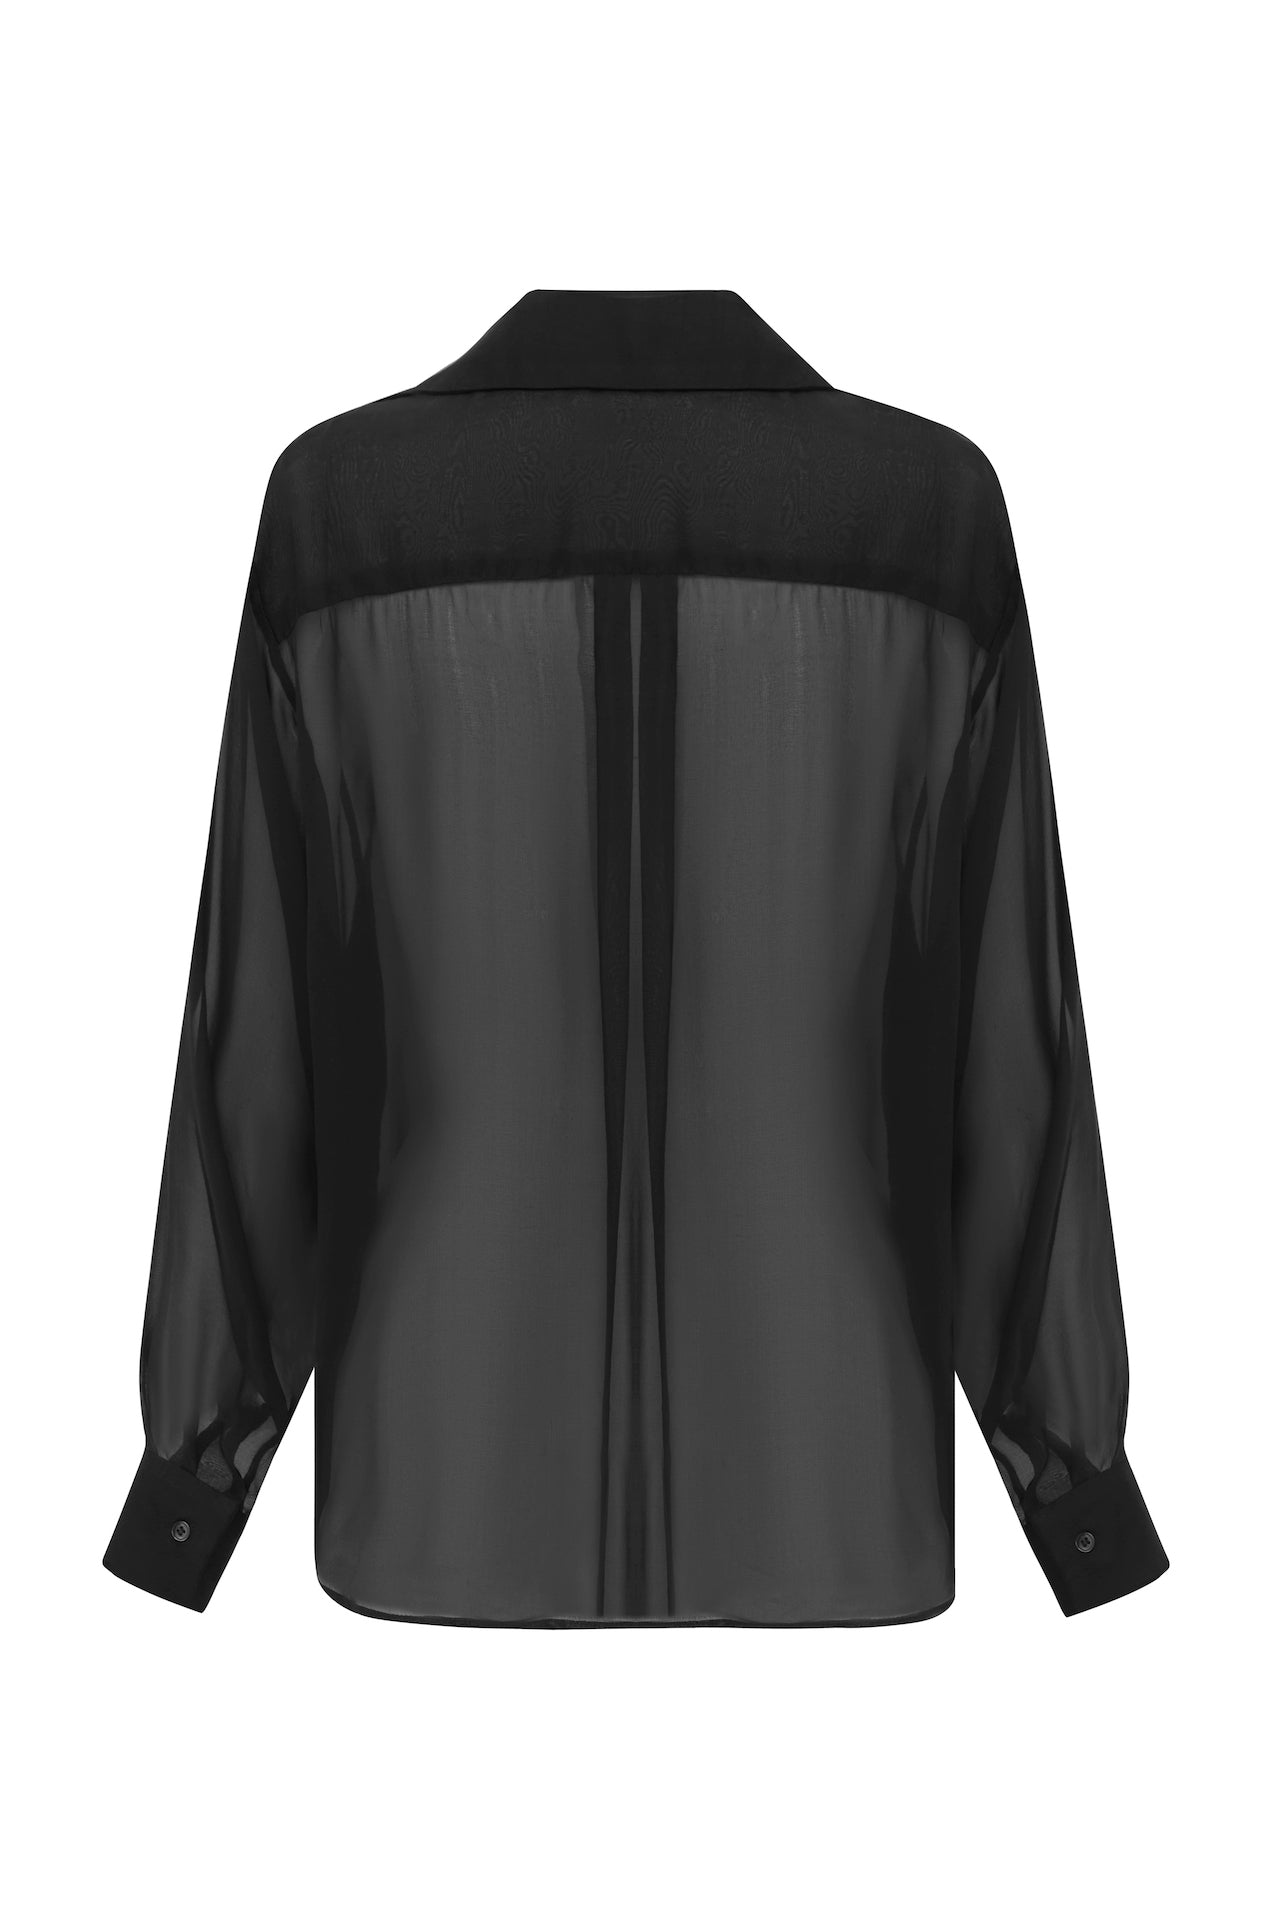 SAINT classic silk shirt sheer black pure silk. made in Australia. 100% silk chiffon